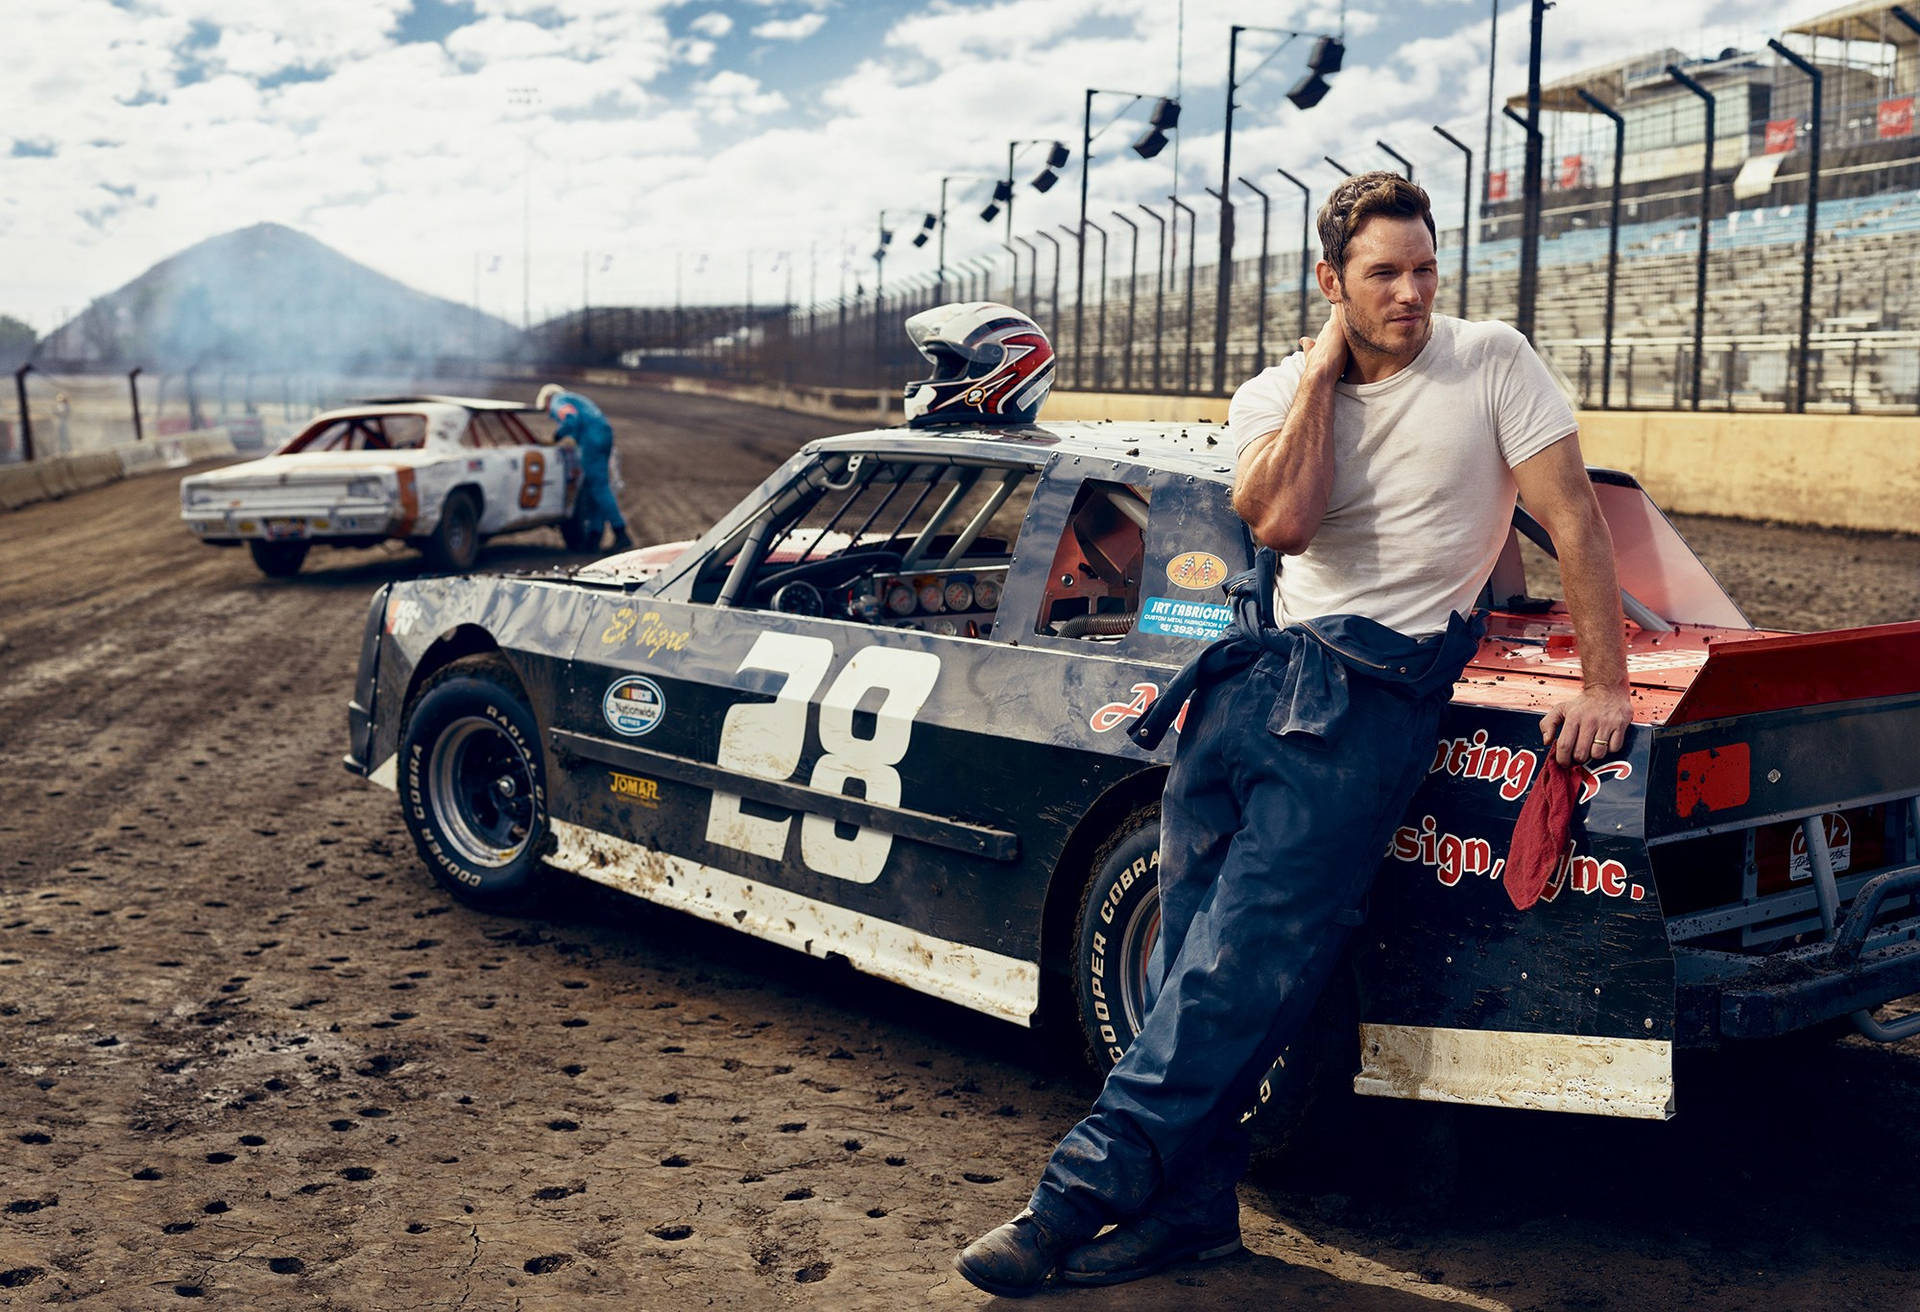 Chris Pratt Race Car Vanity Fair Background